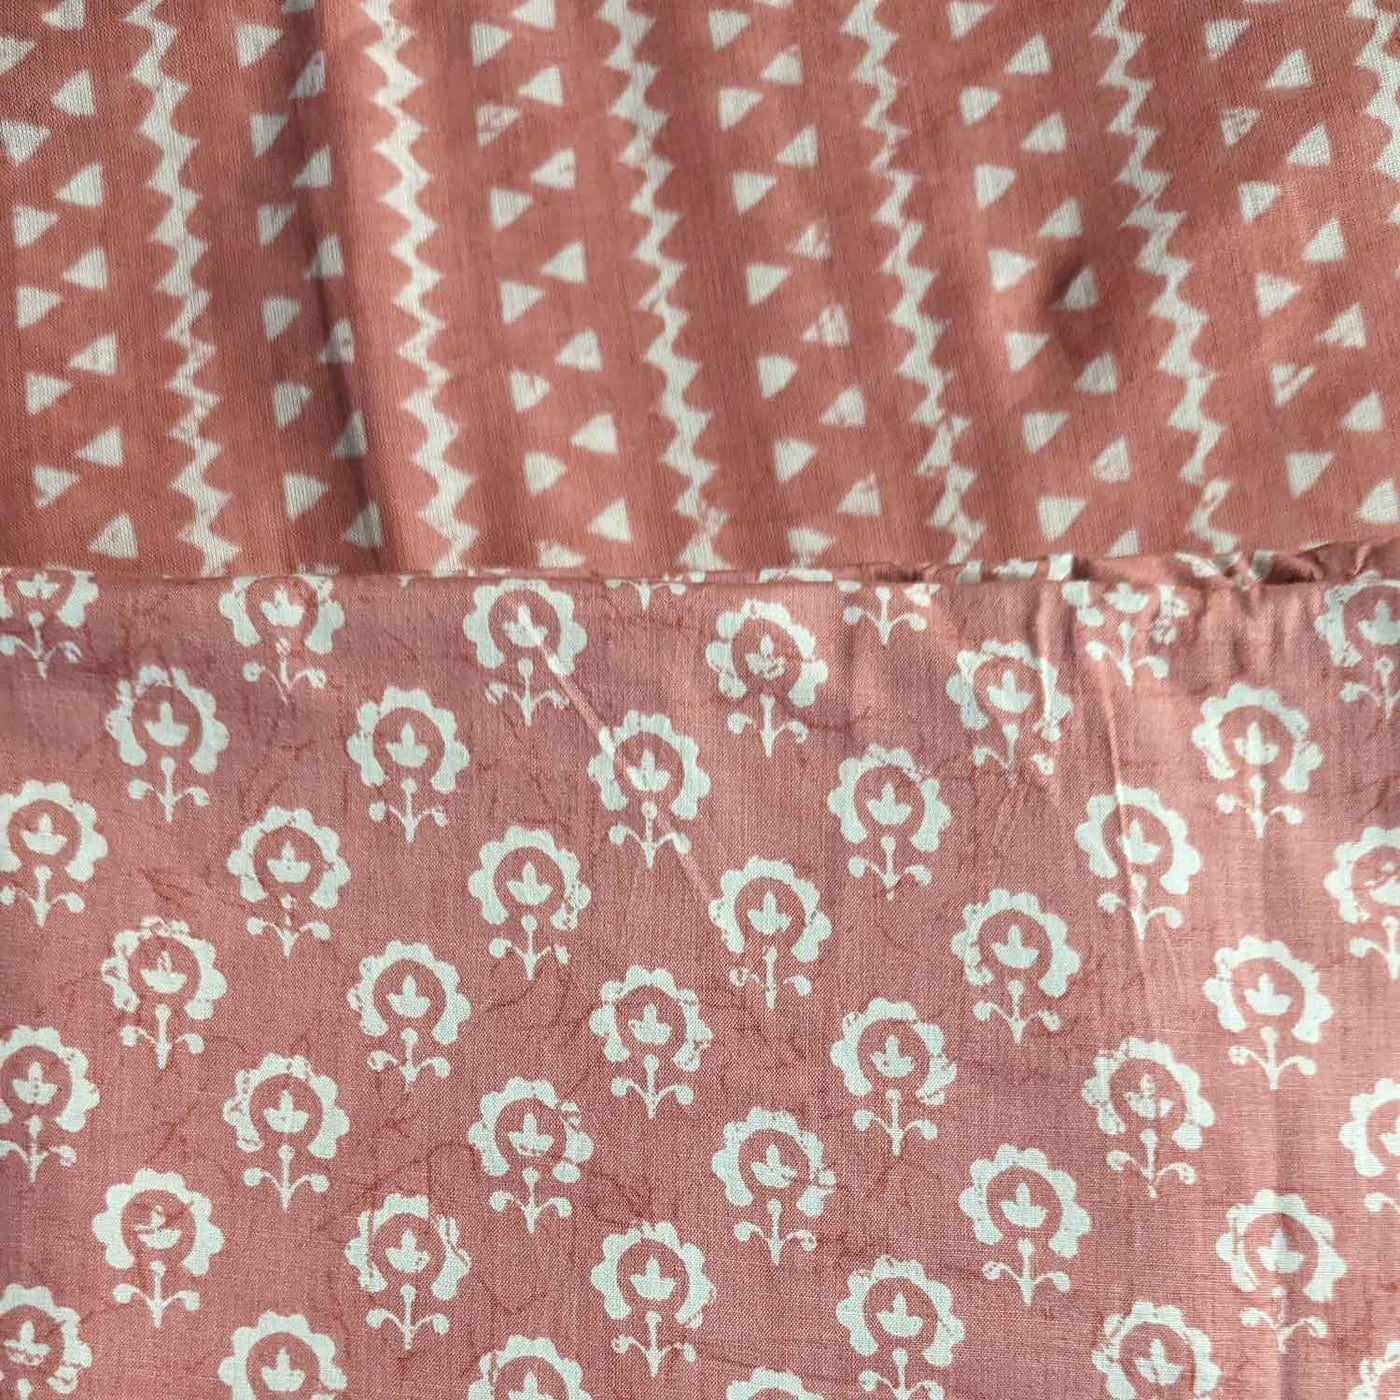 Brick Brown Motifs / Stripes Cotton Fabric Combo